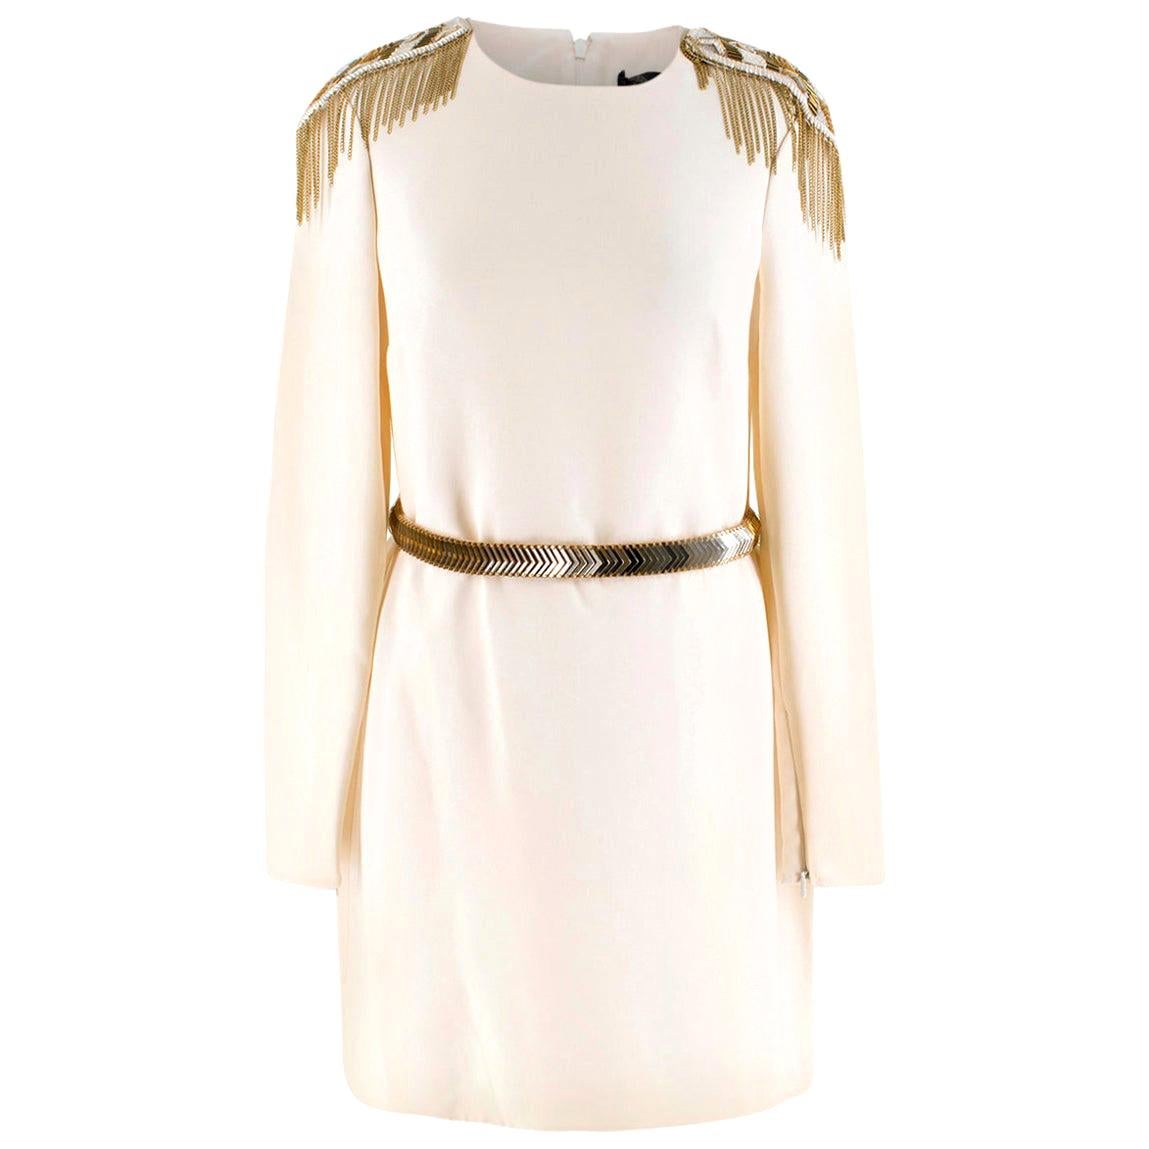 Versace Cream Mini Dress with Crystal Embellished Shoulders & Belt - Size US 4